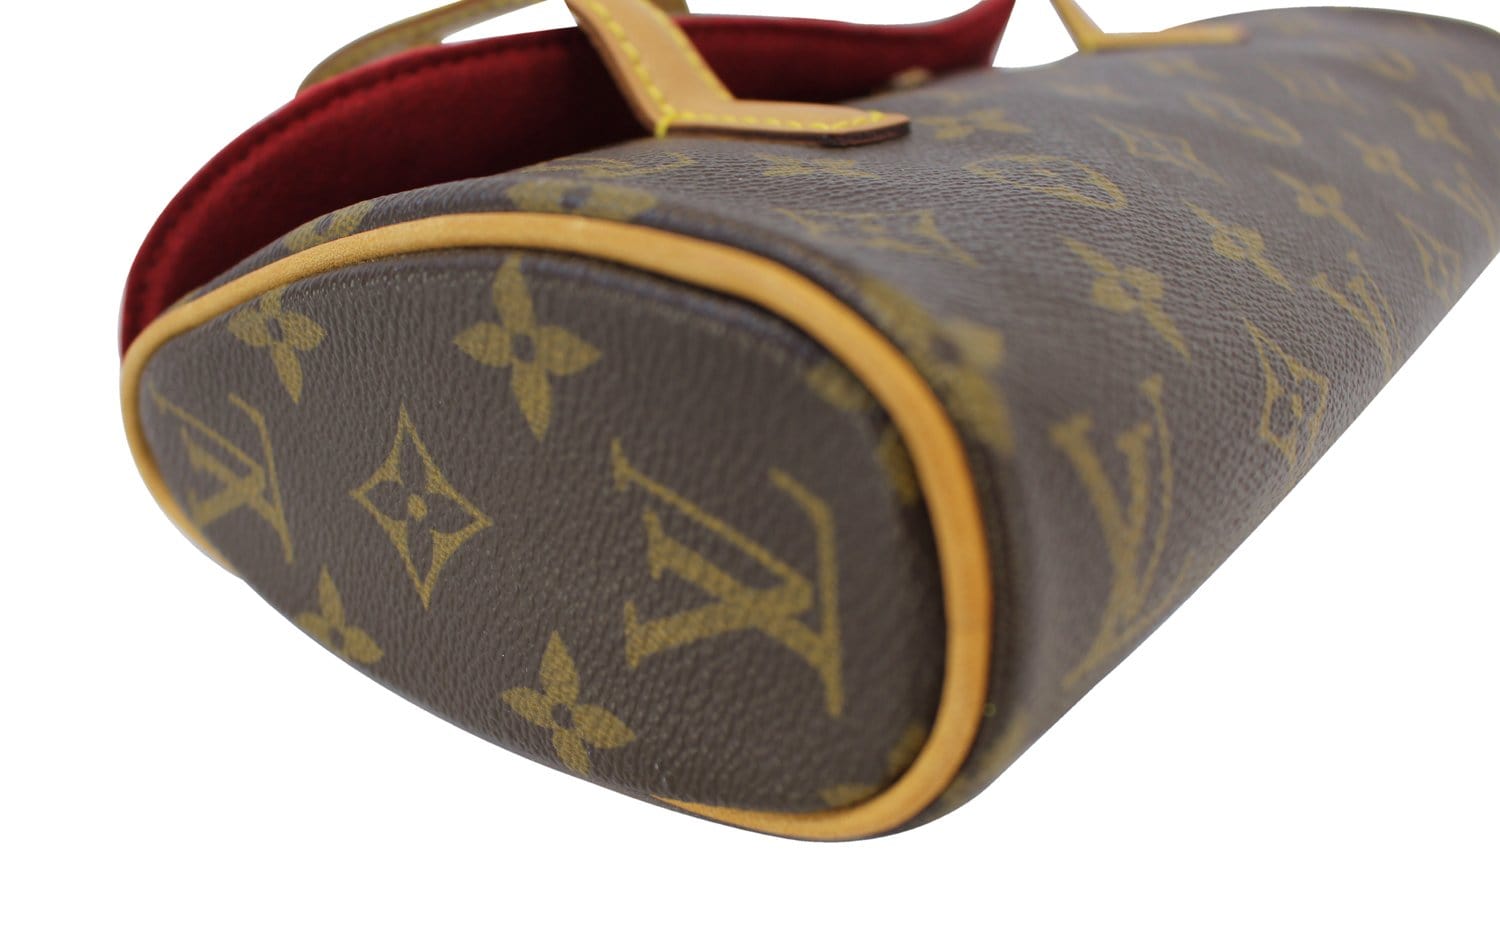 LV Sonatine Handbag in Monogram Canvas and GHW – Brands Lover